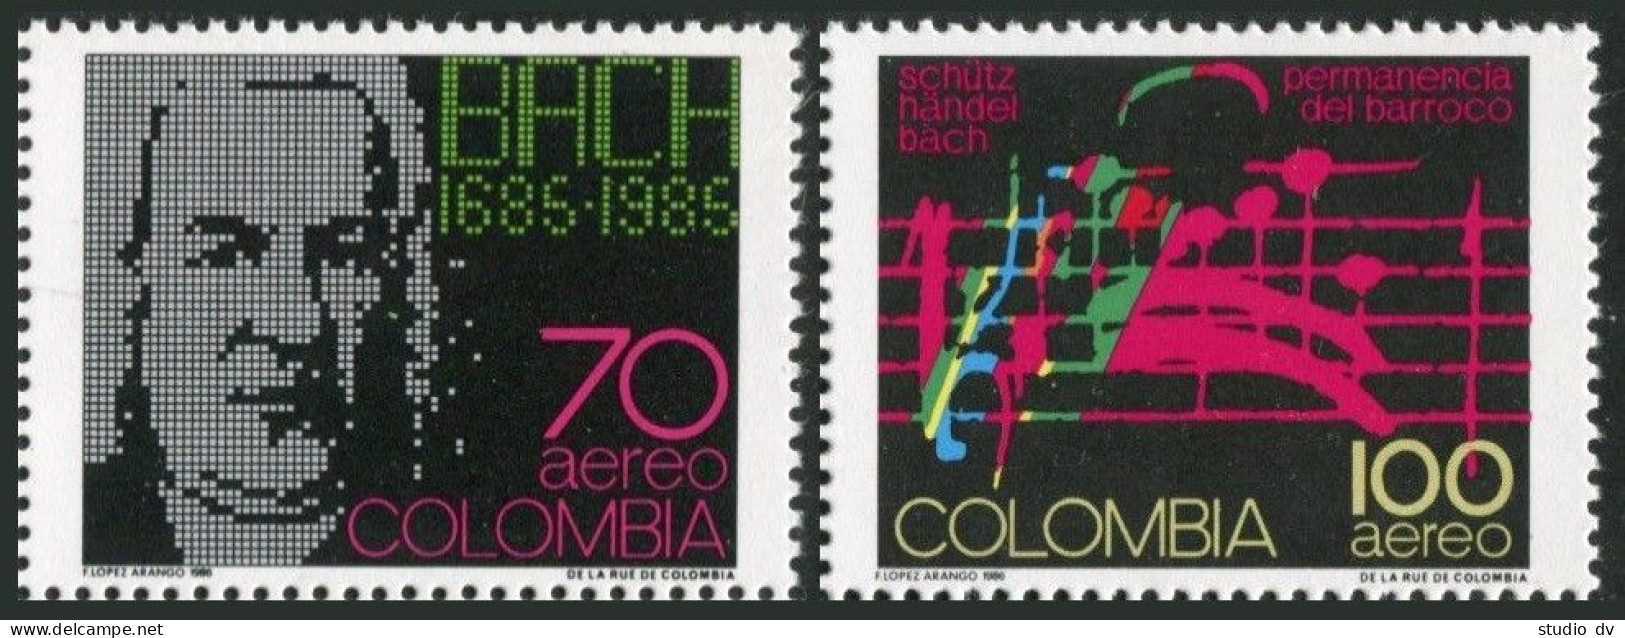 Colombia C766-C767,MNH.Michel 1678-1679. Bach,Handel,Schutz,composers,1986. - Colombia